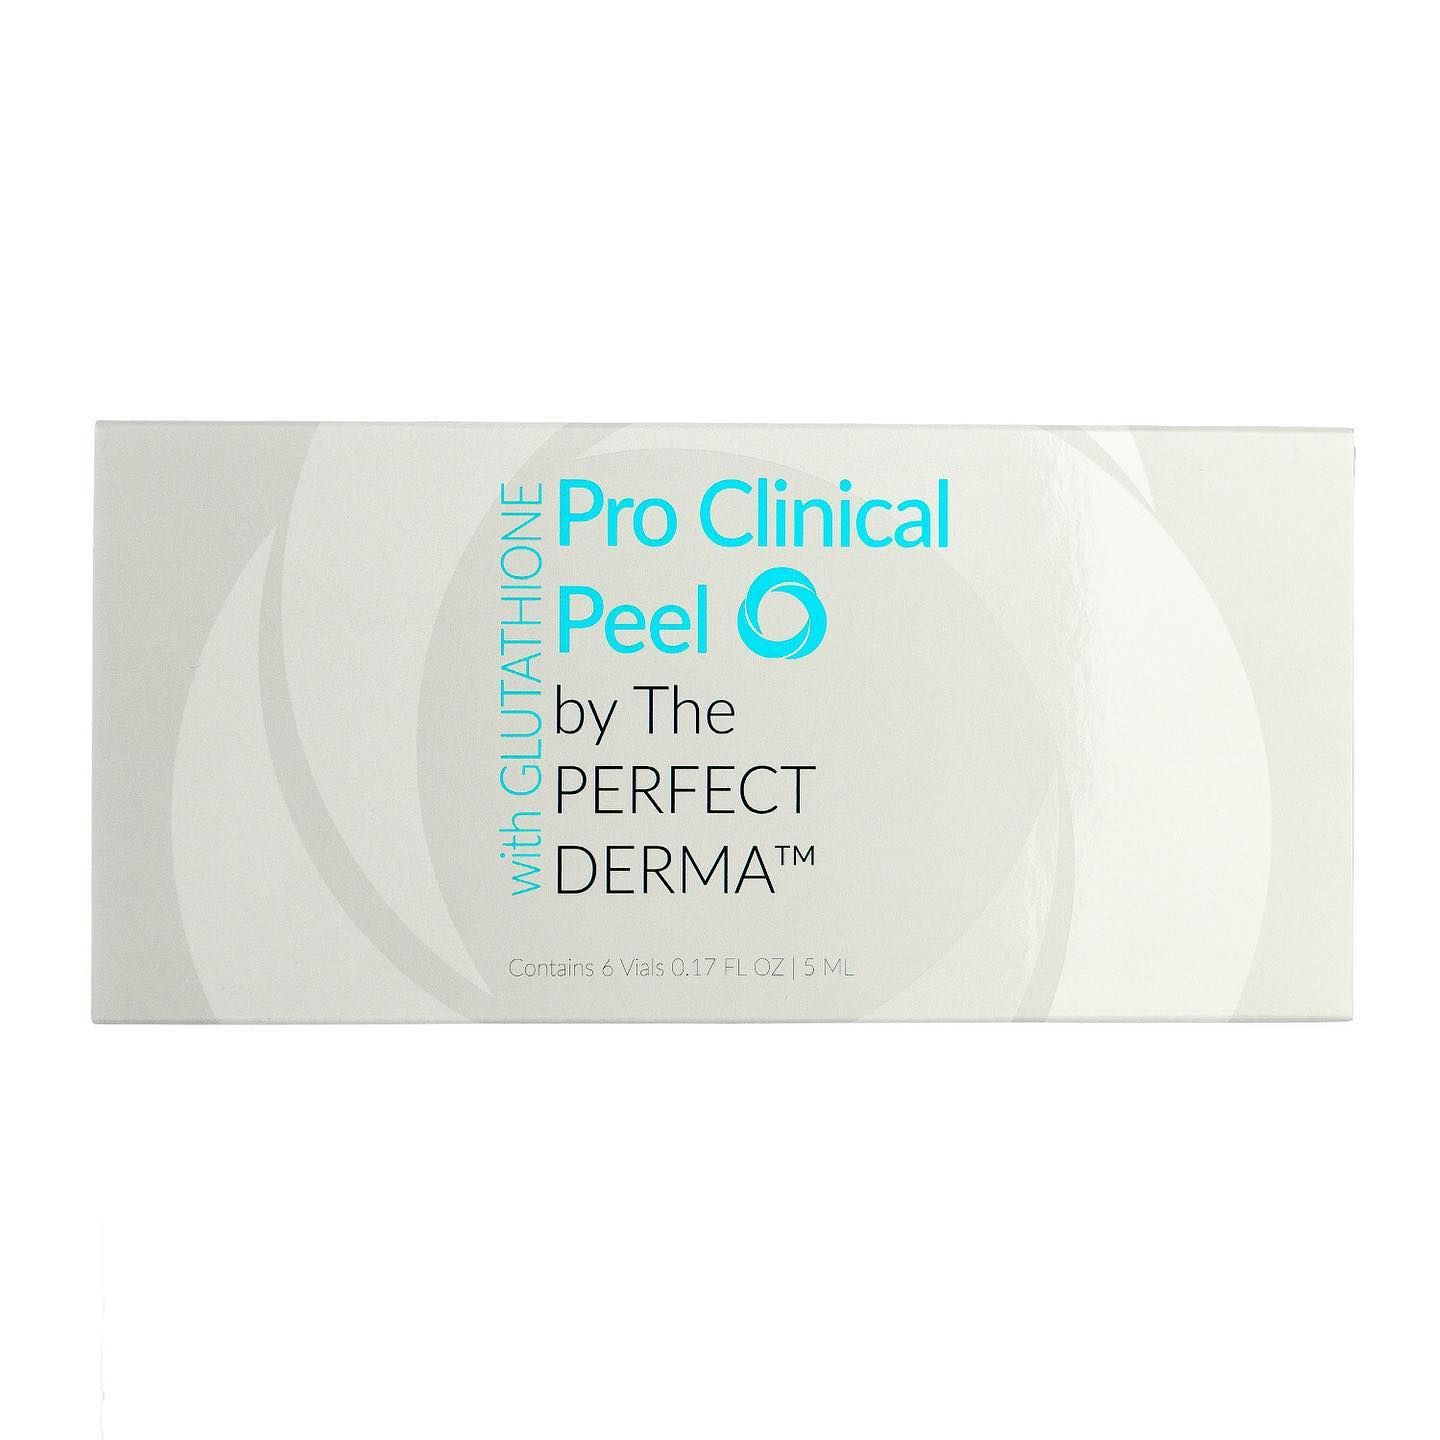  Bộ Peel Da Tại Nhà - PRO CLINICAL PEEL by The Perfect Derma™ 